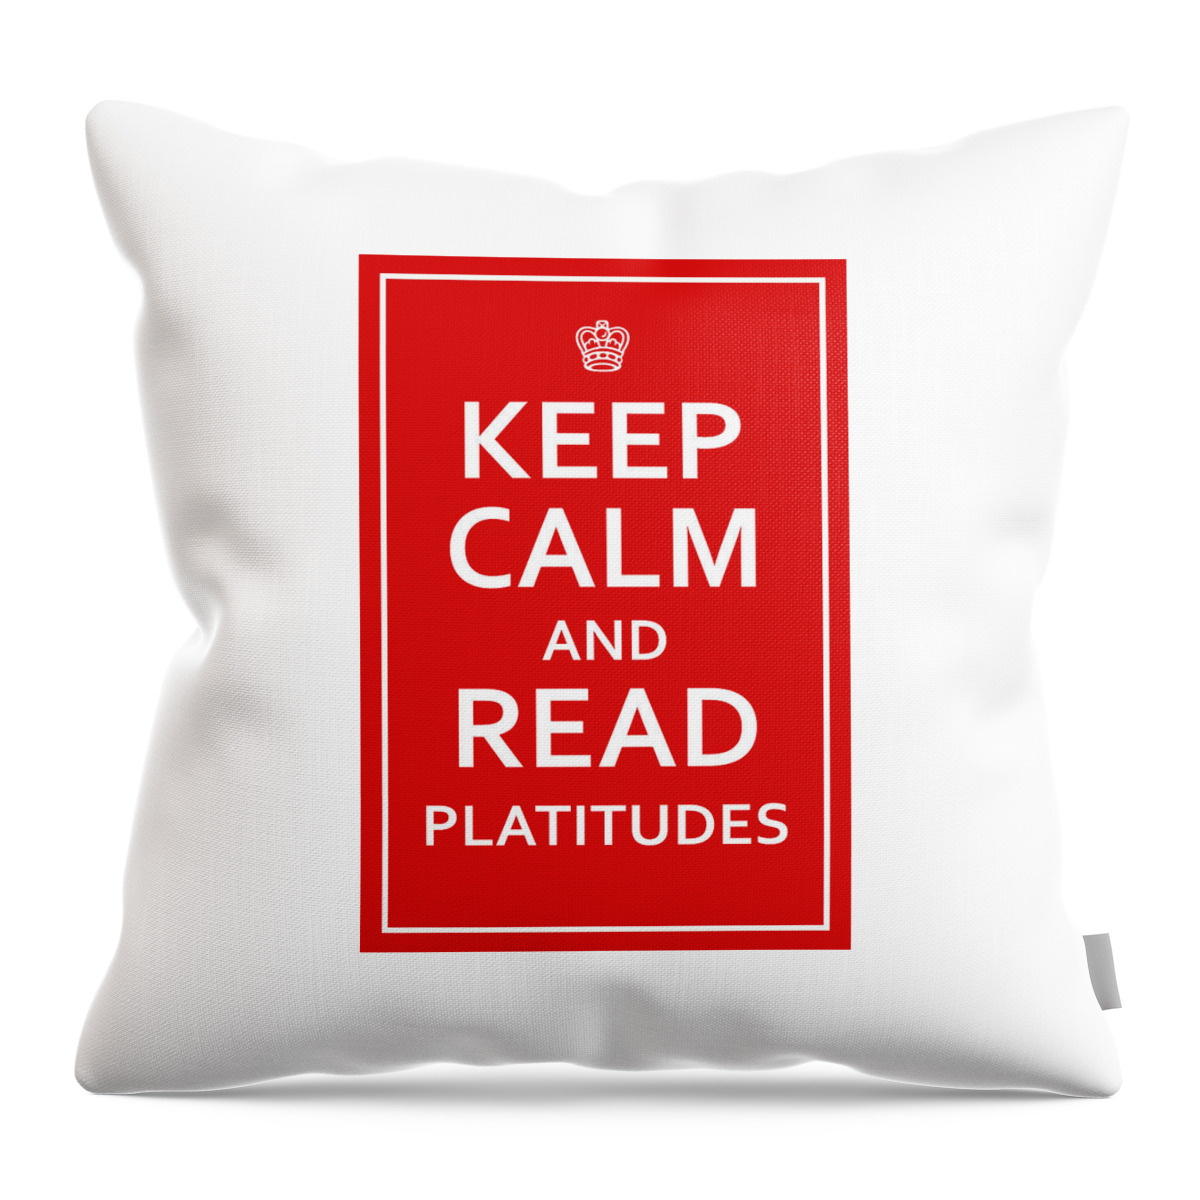 Richard Reeve Throw Pillow featuring the digital art Keep Calm - Read Platitudes by Richard Reeve